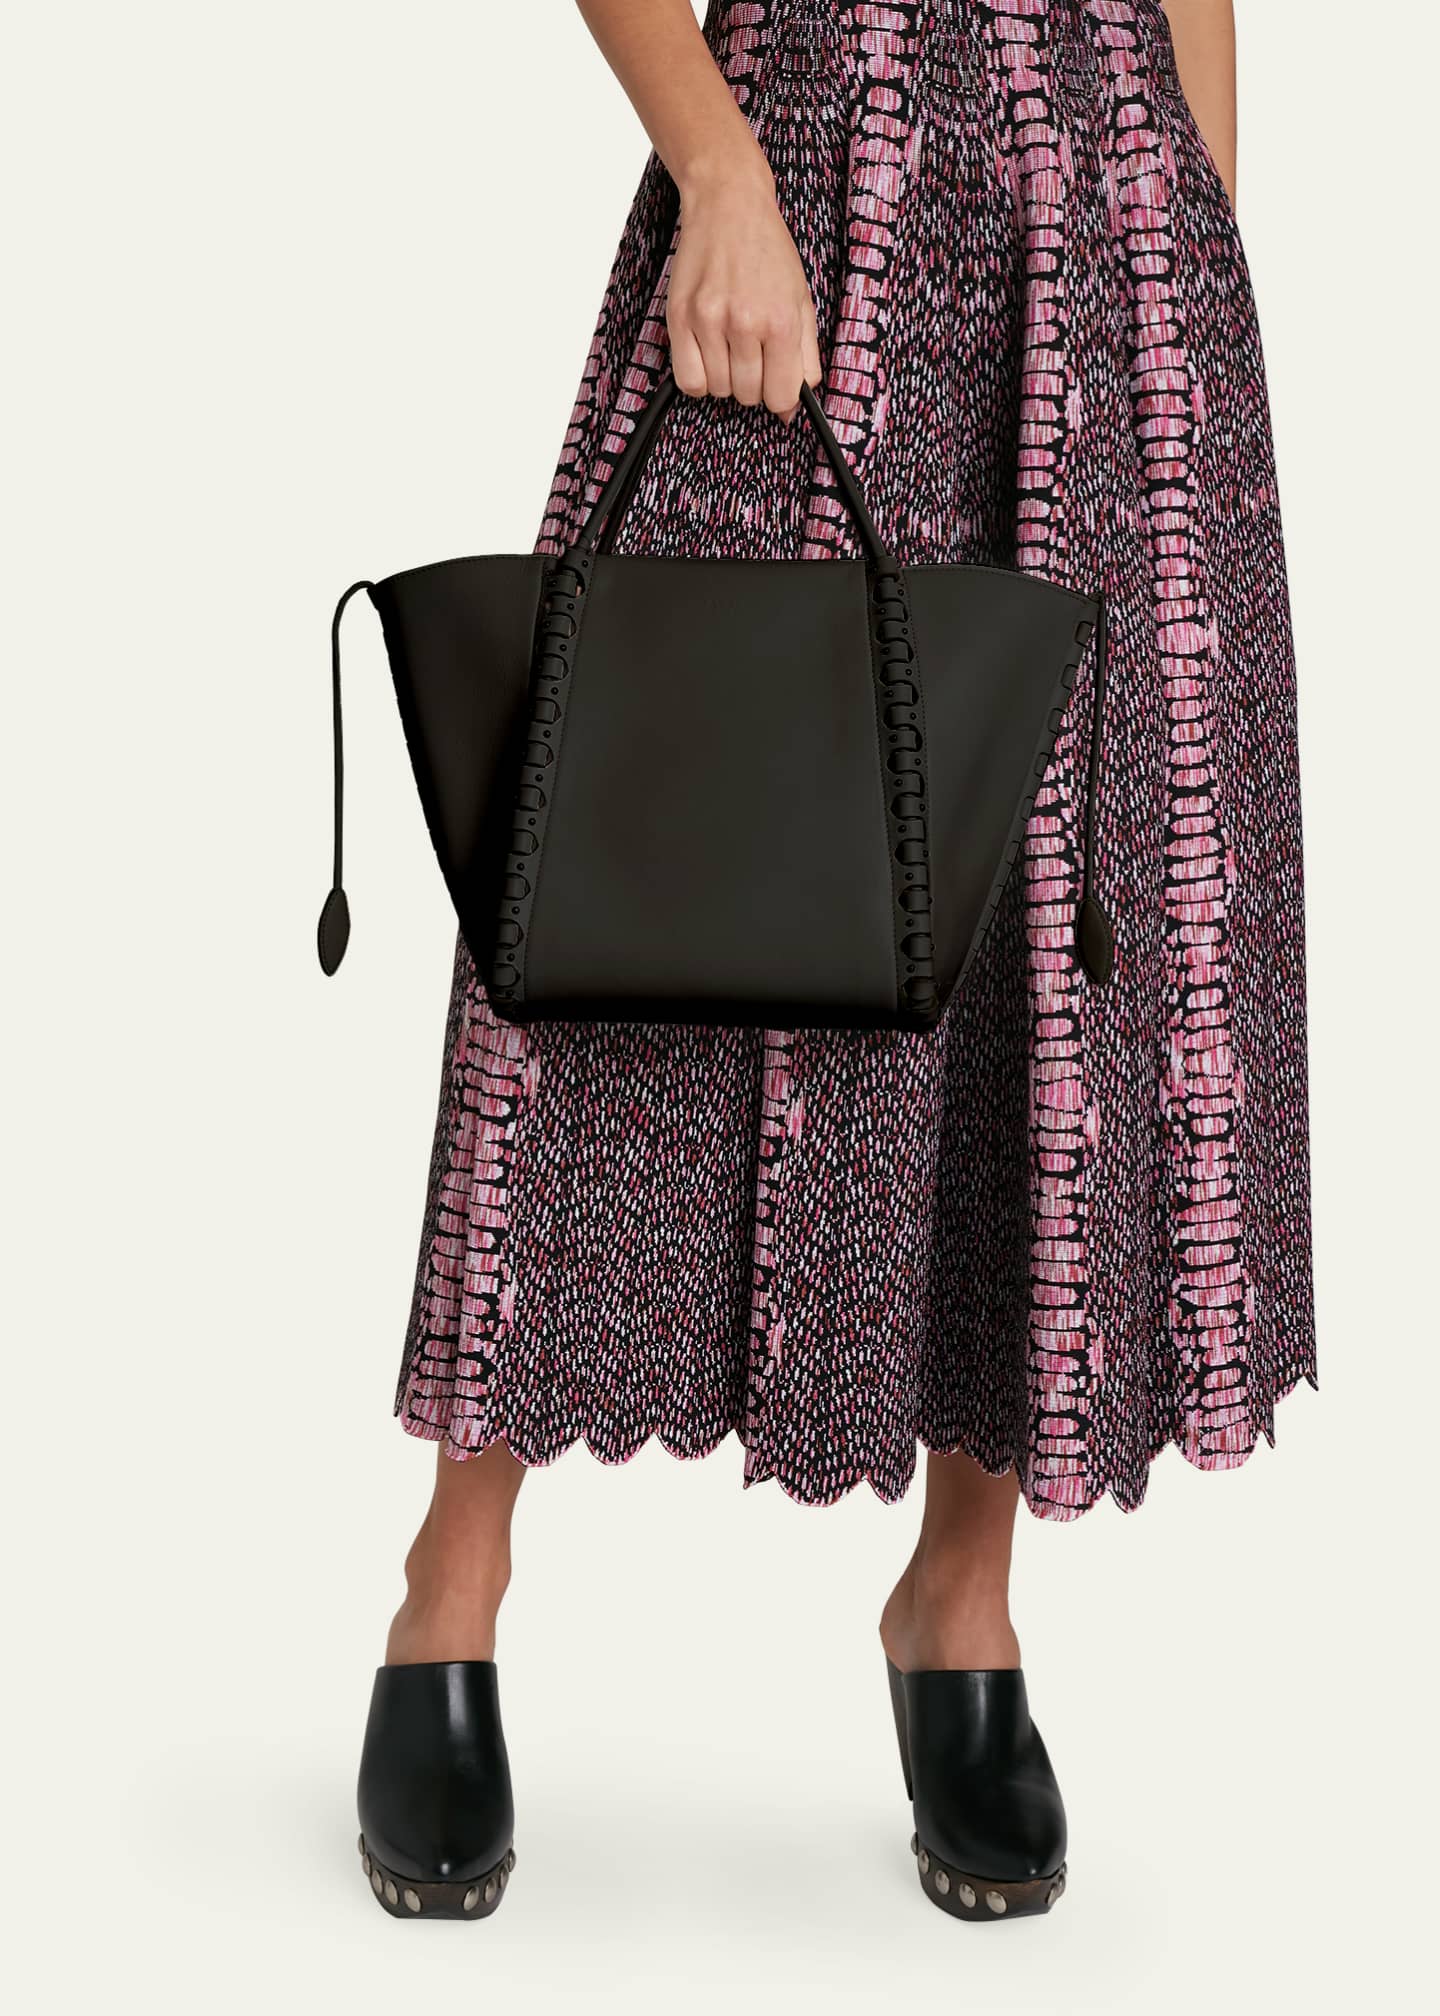 ALAIA Le Hinge Small Studded Leather Tote Bag - Bergdorf Goodman